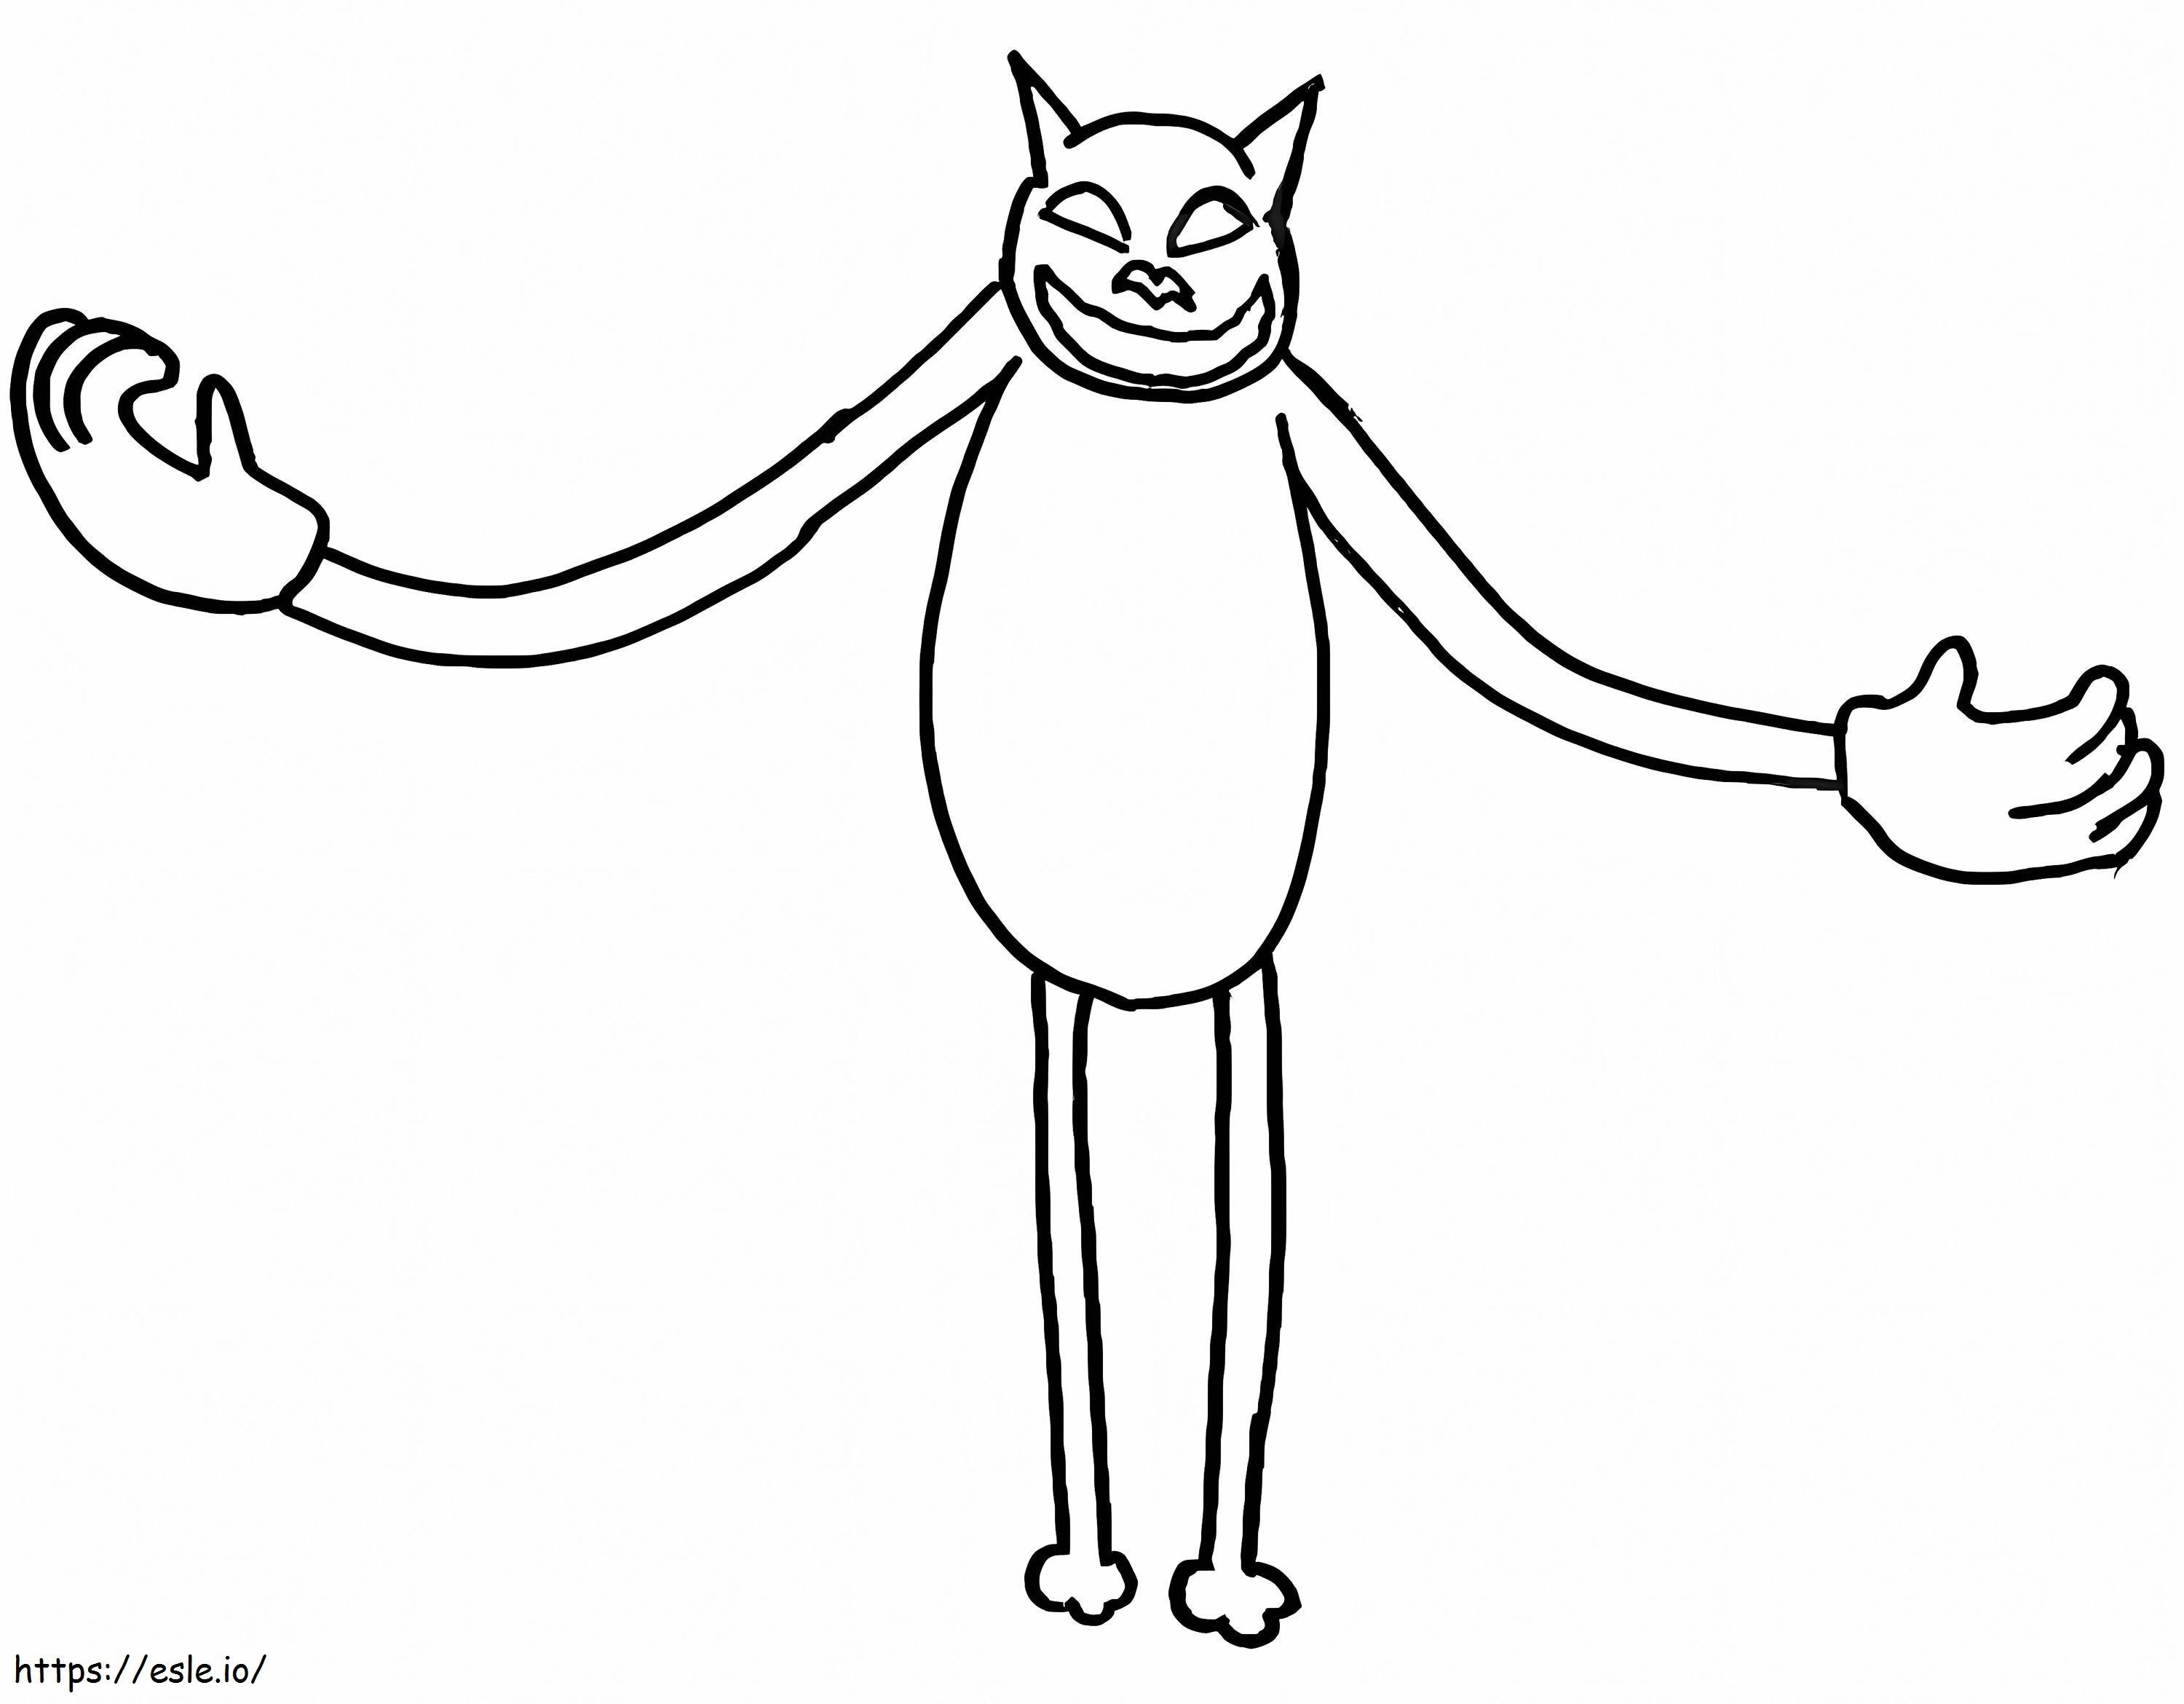 Gato gigante de desenho animado para colorir